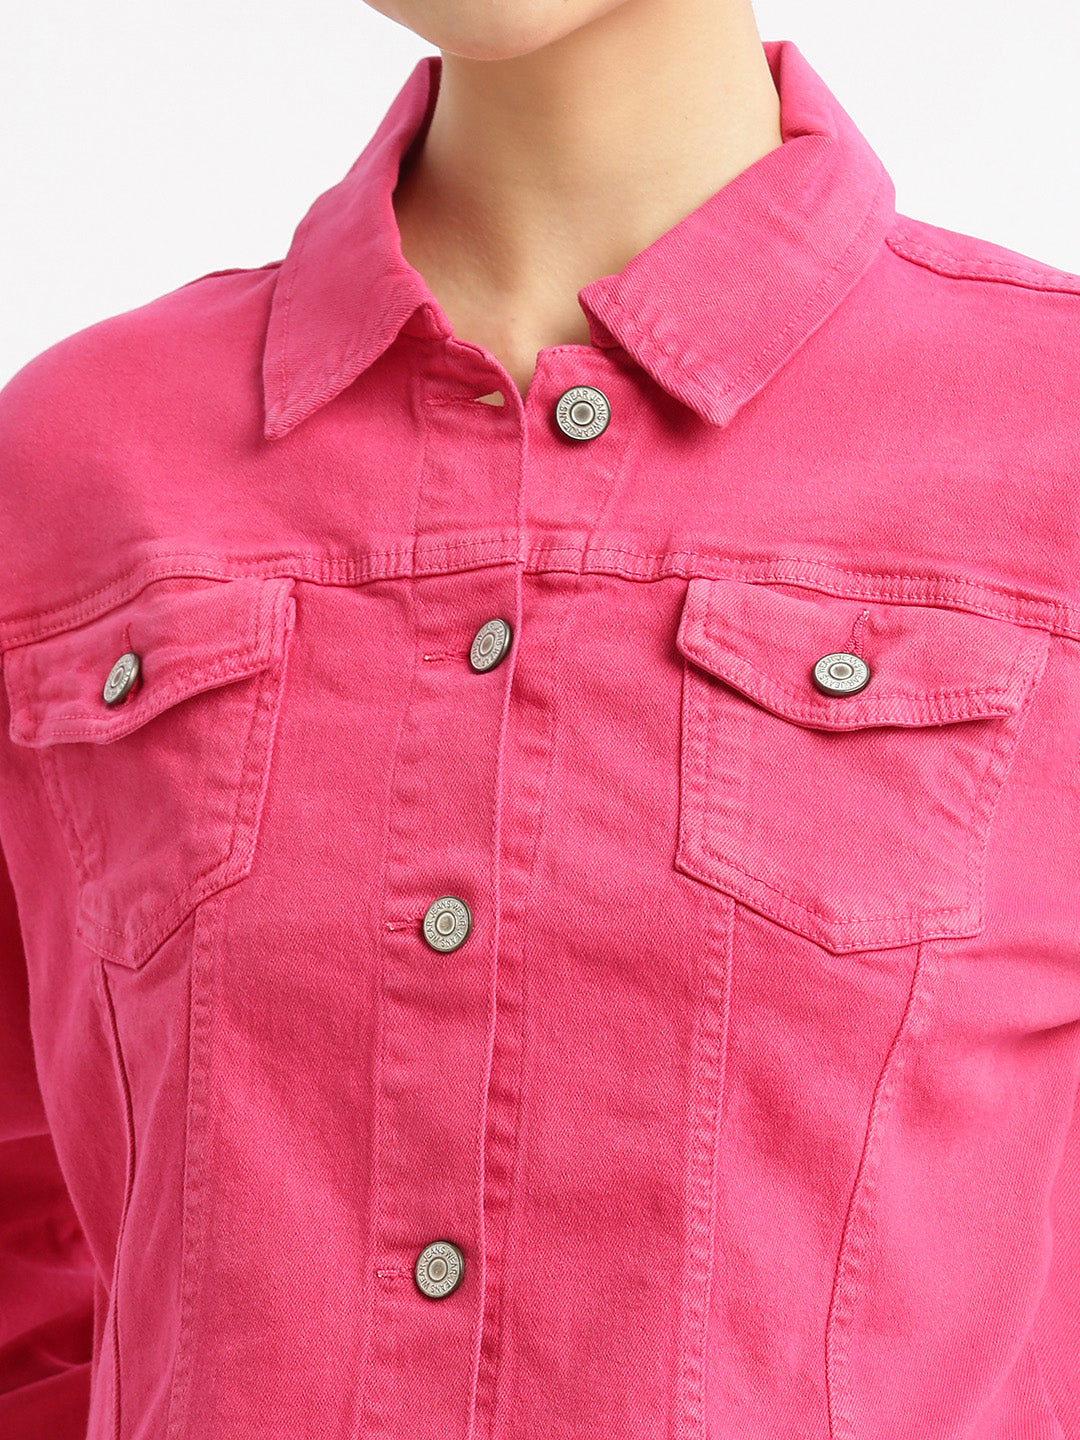 Women Pink Denim Jacket